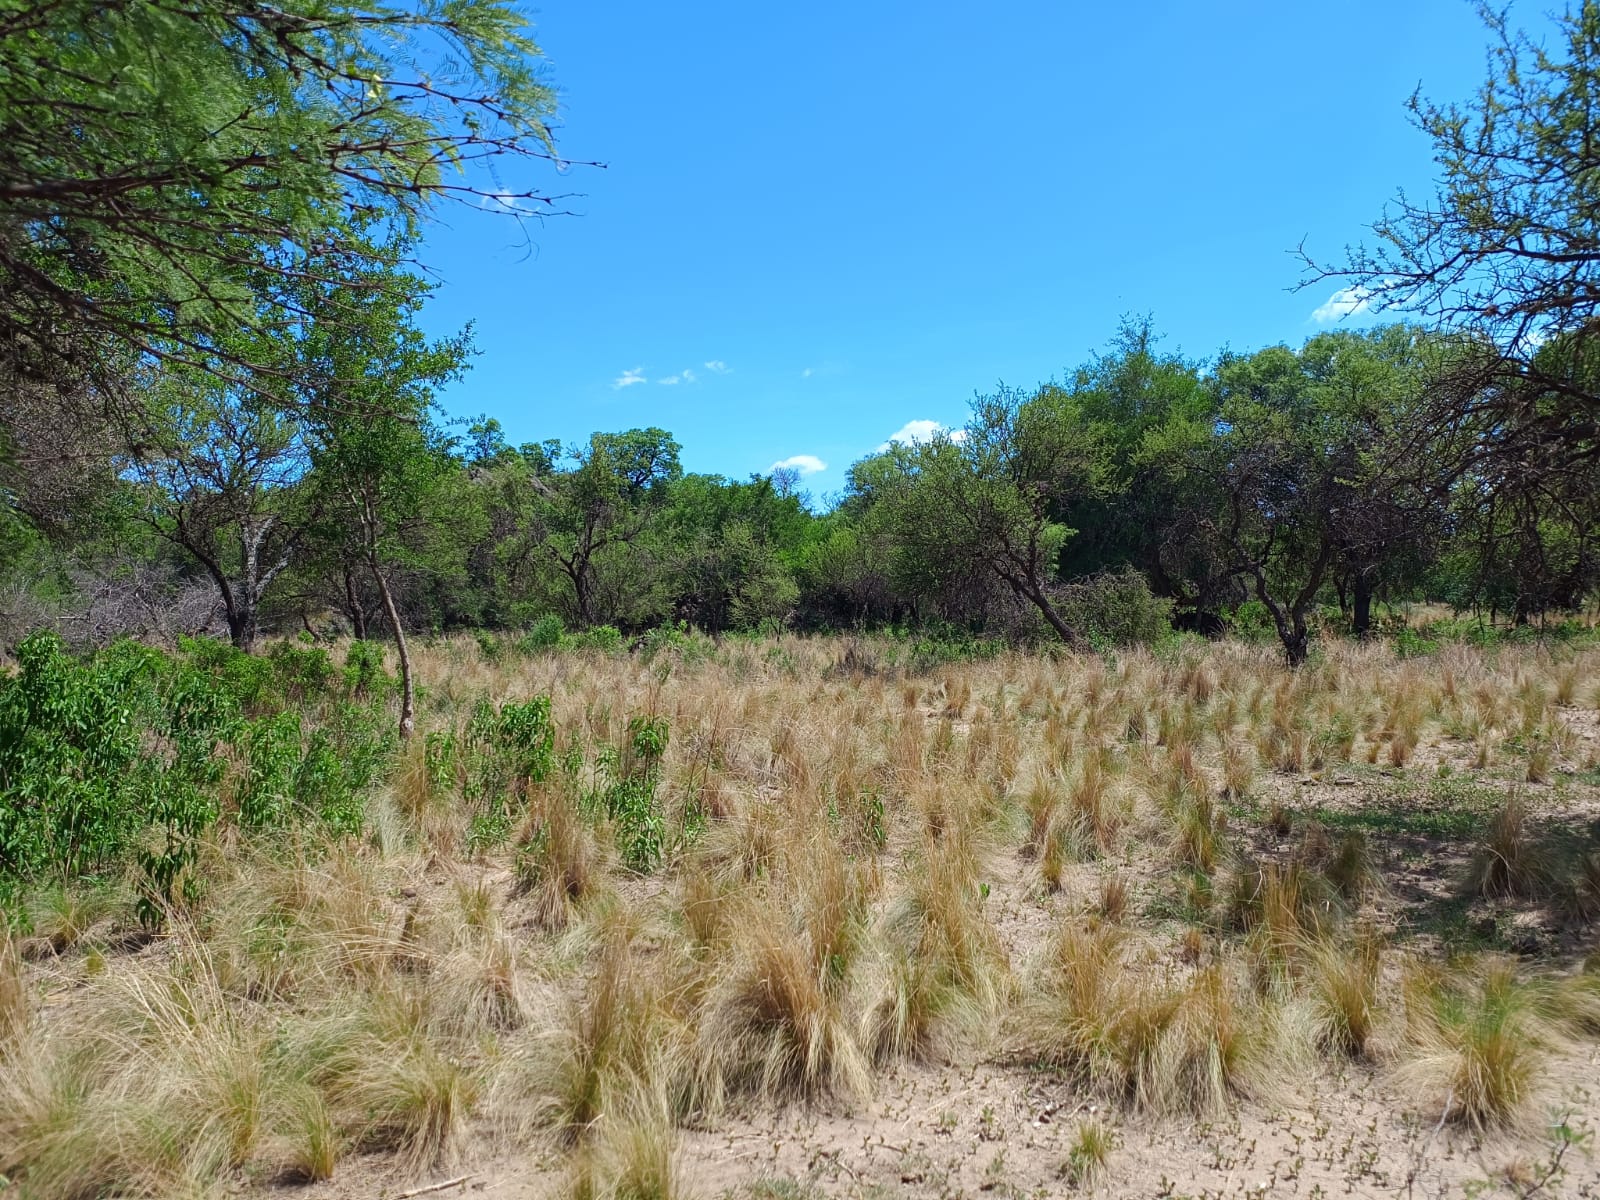 Salsacate Campo de 225 hectareas aprto cultivo Ganaderia Turismo